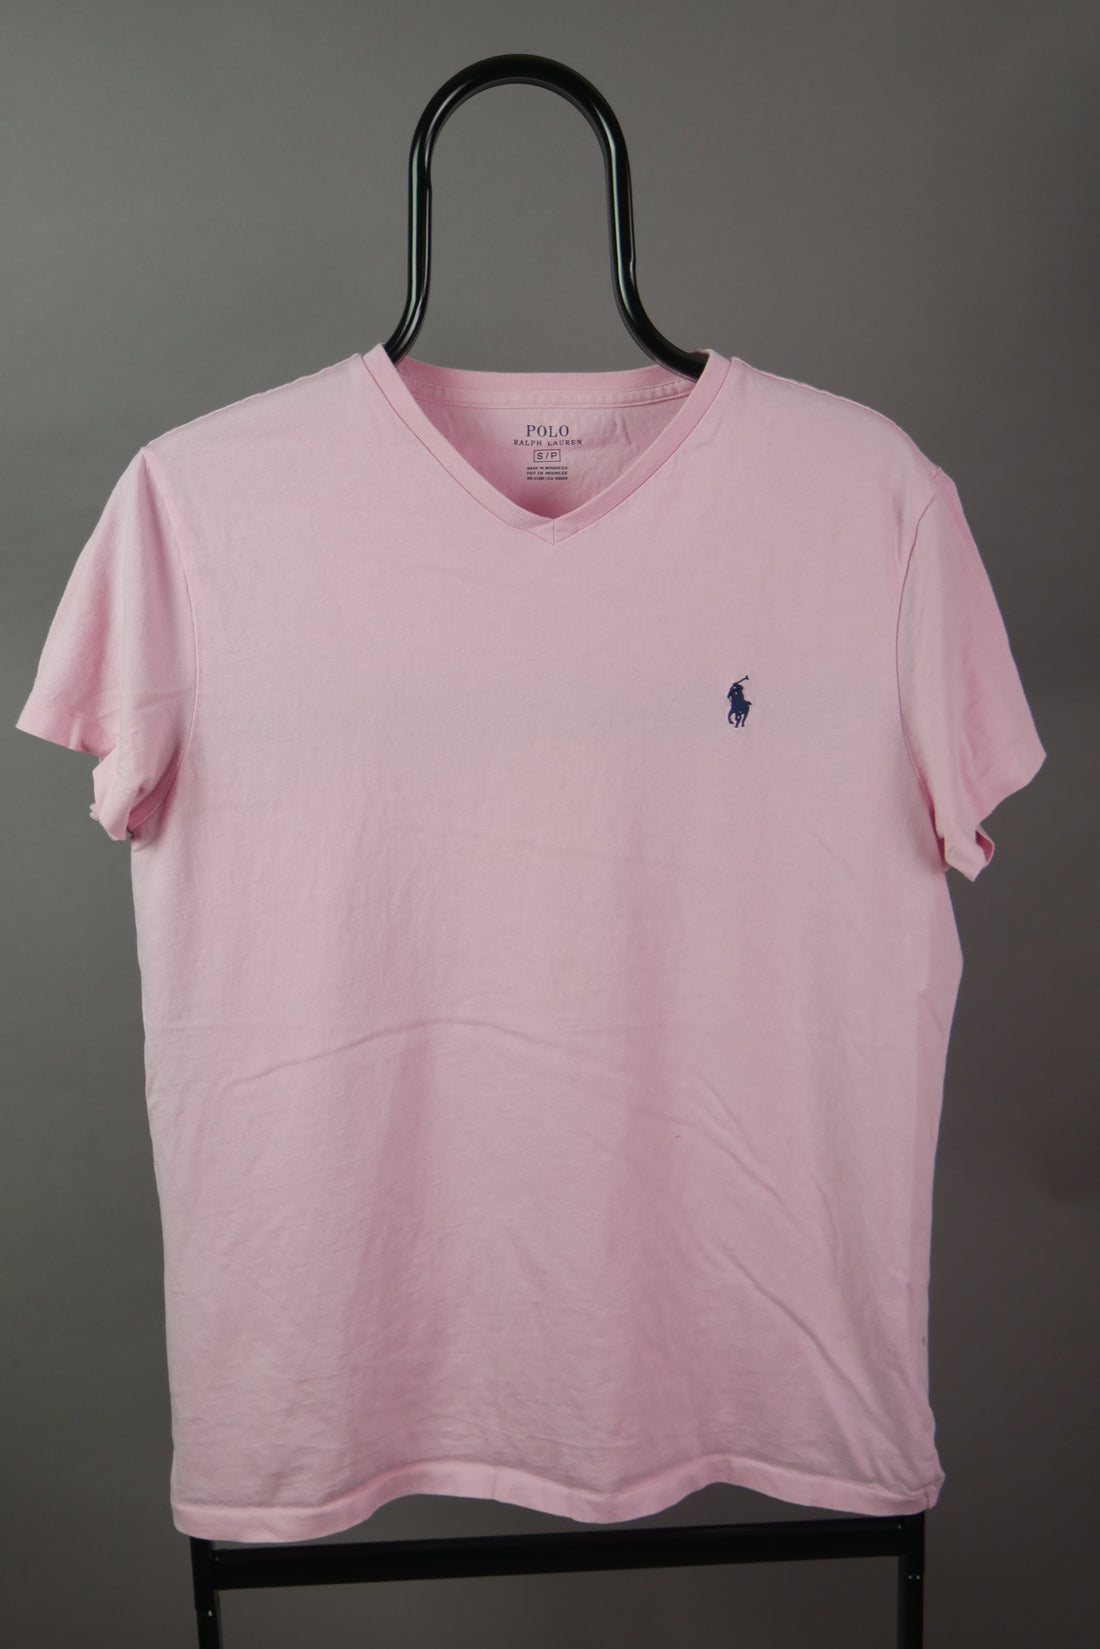 The V Neck Ralph Lauren T-Shirt (S)